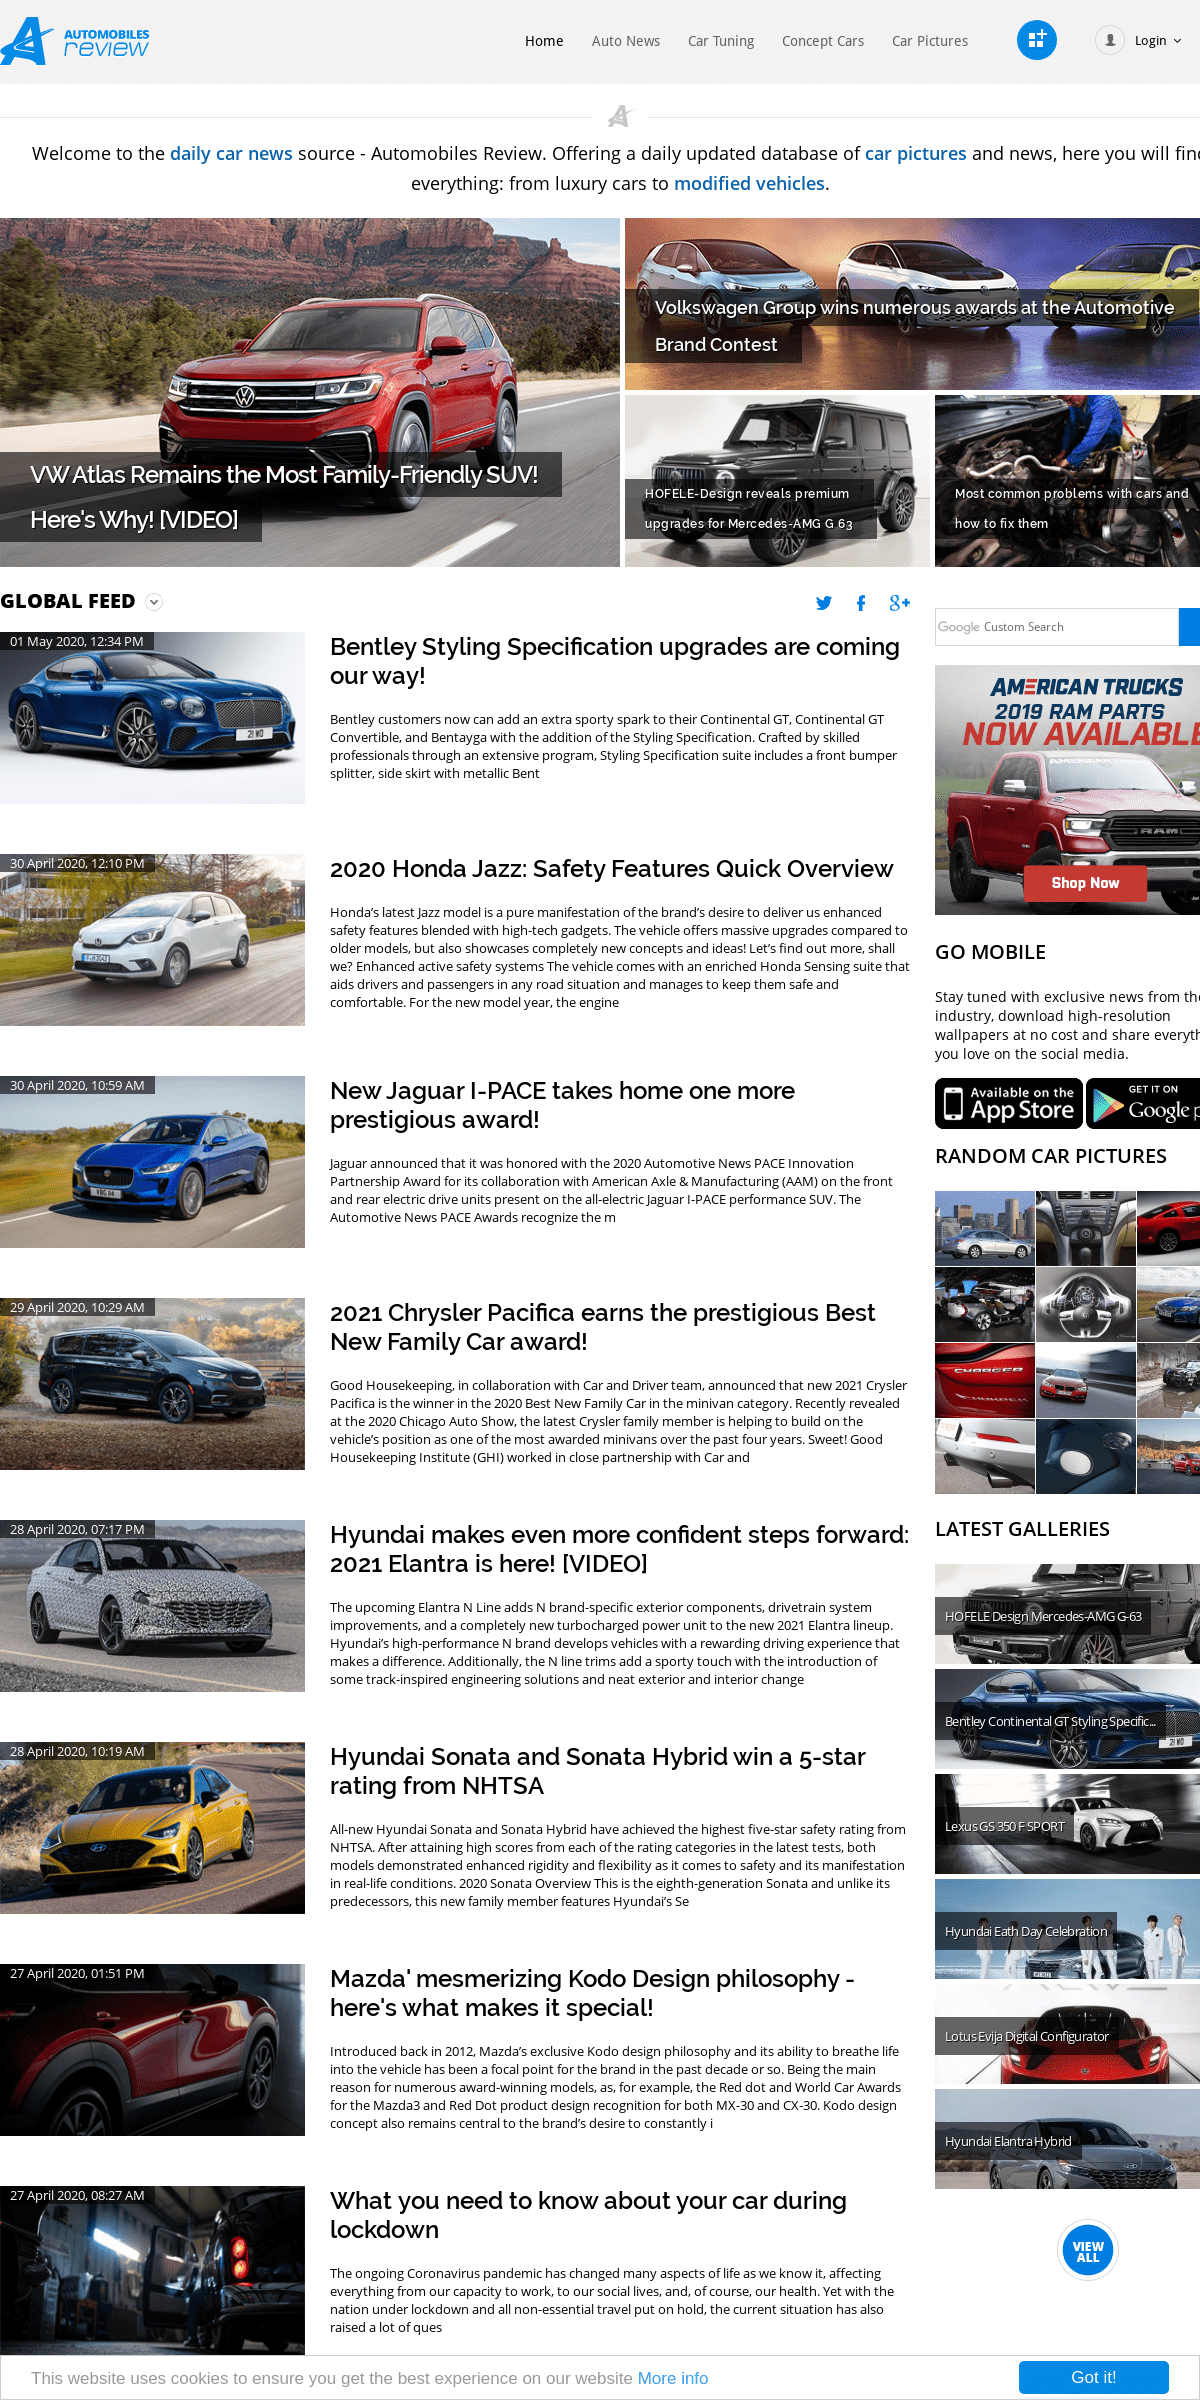 A complete backup of automobilesreview.com